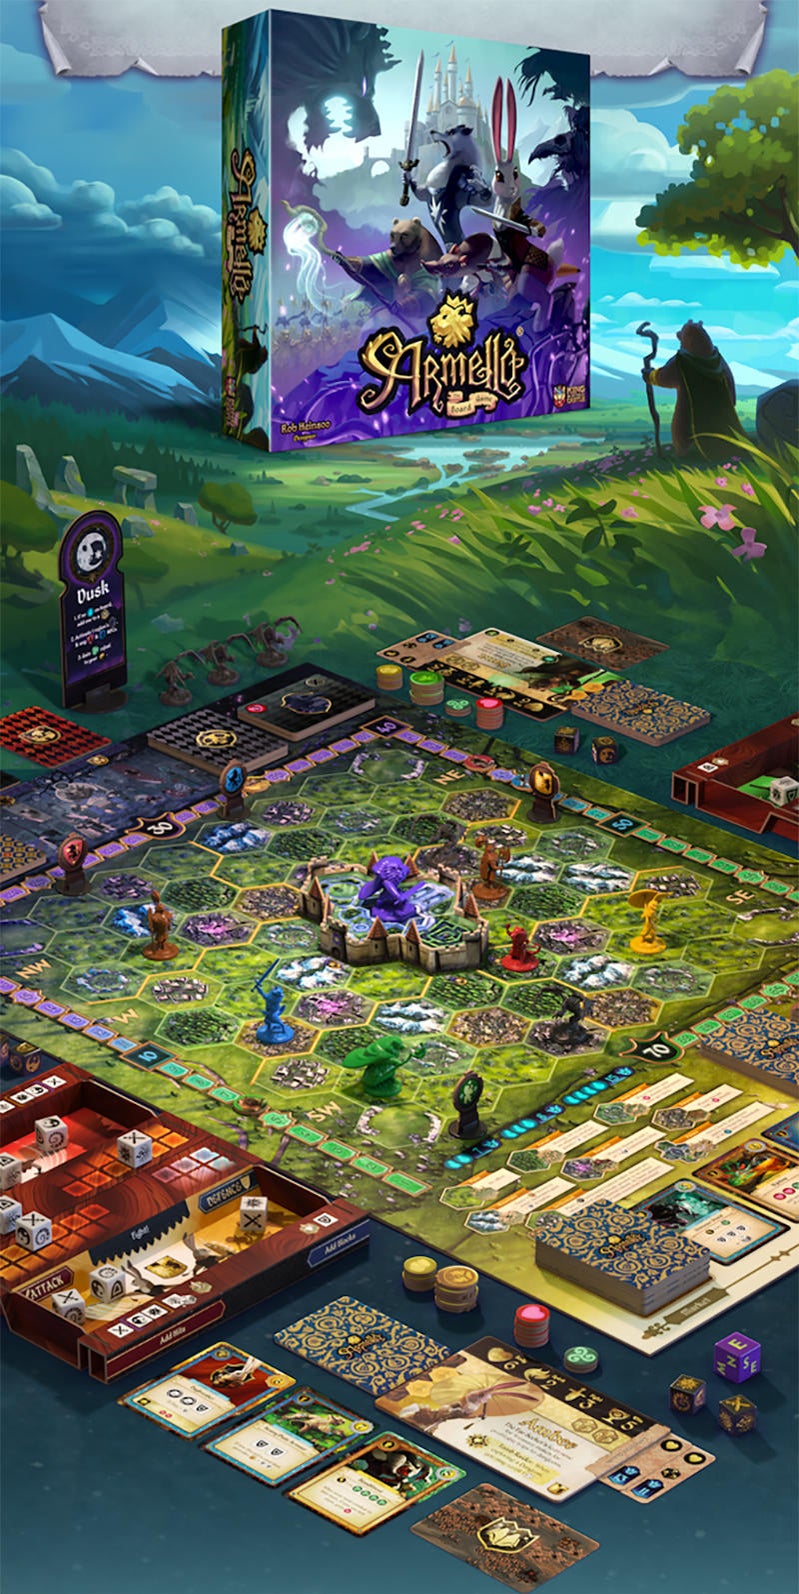 Armello: The Board Game Becomes a Reality on Kickstarter